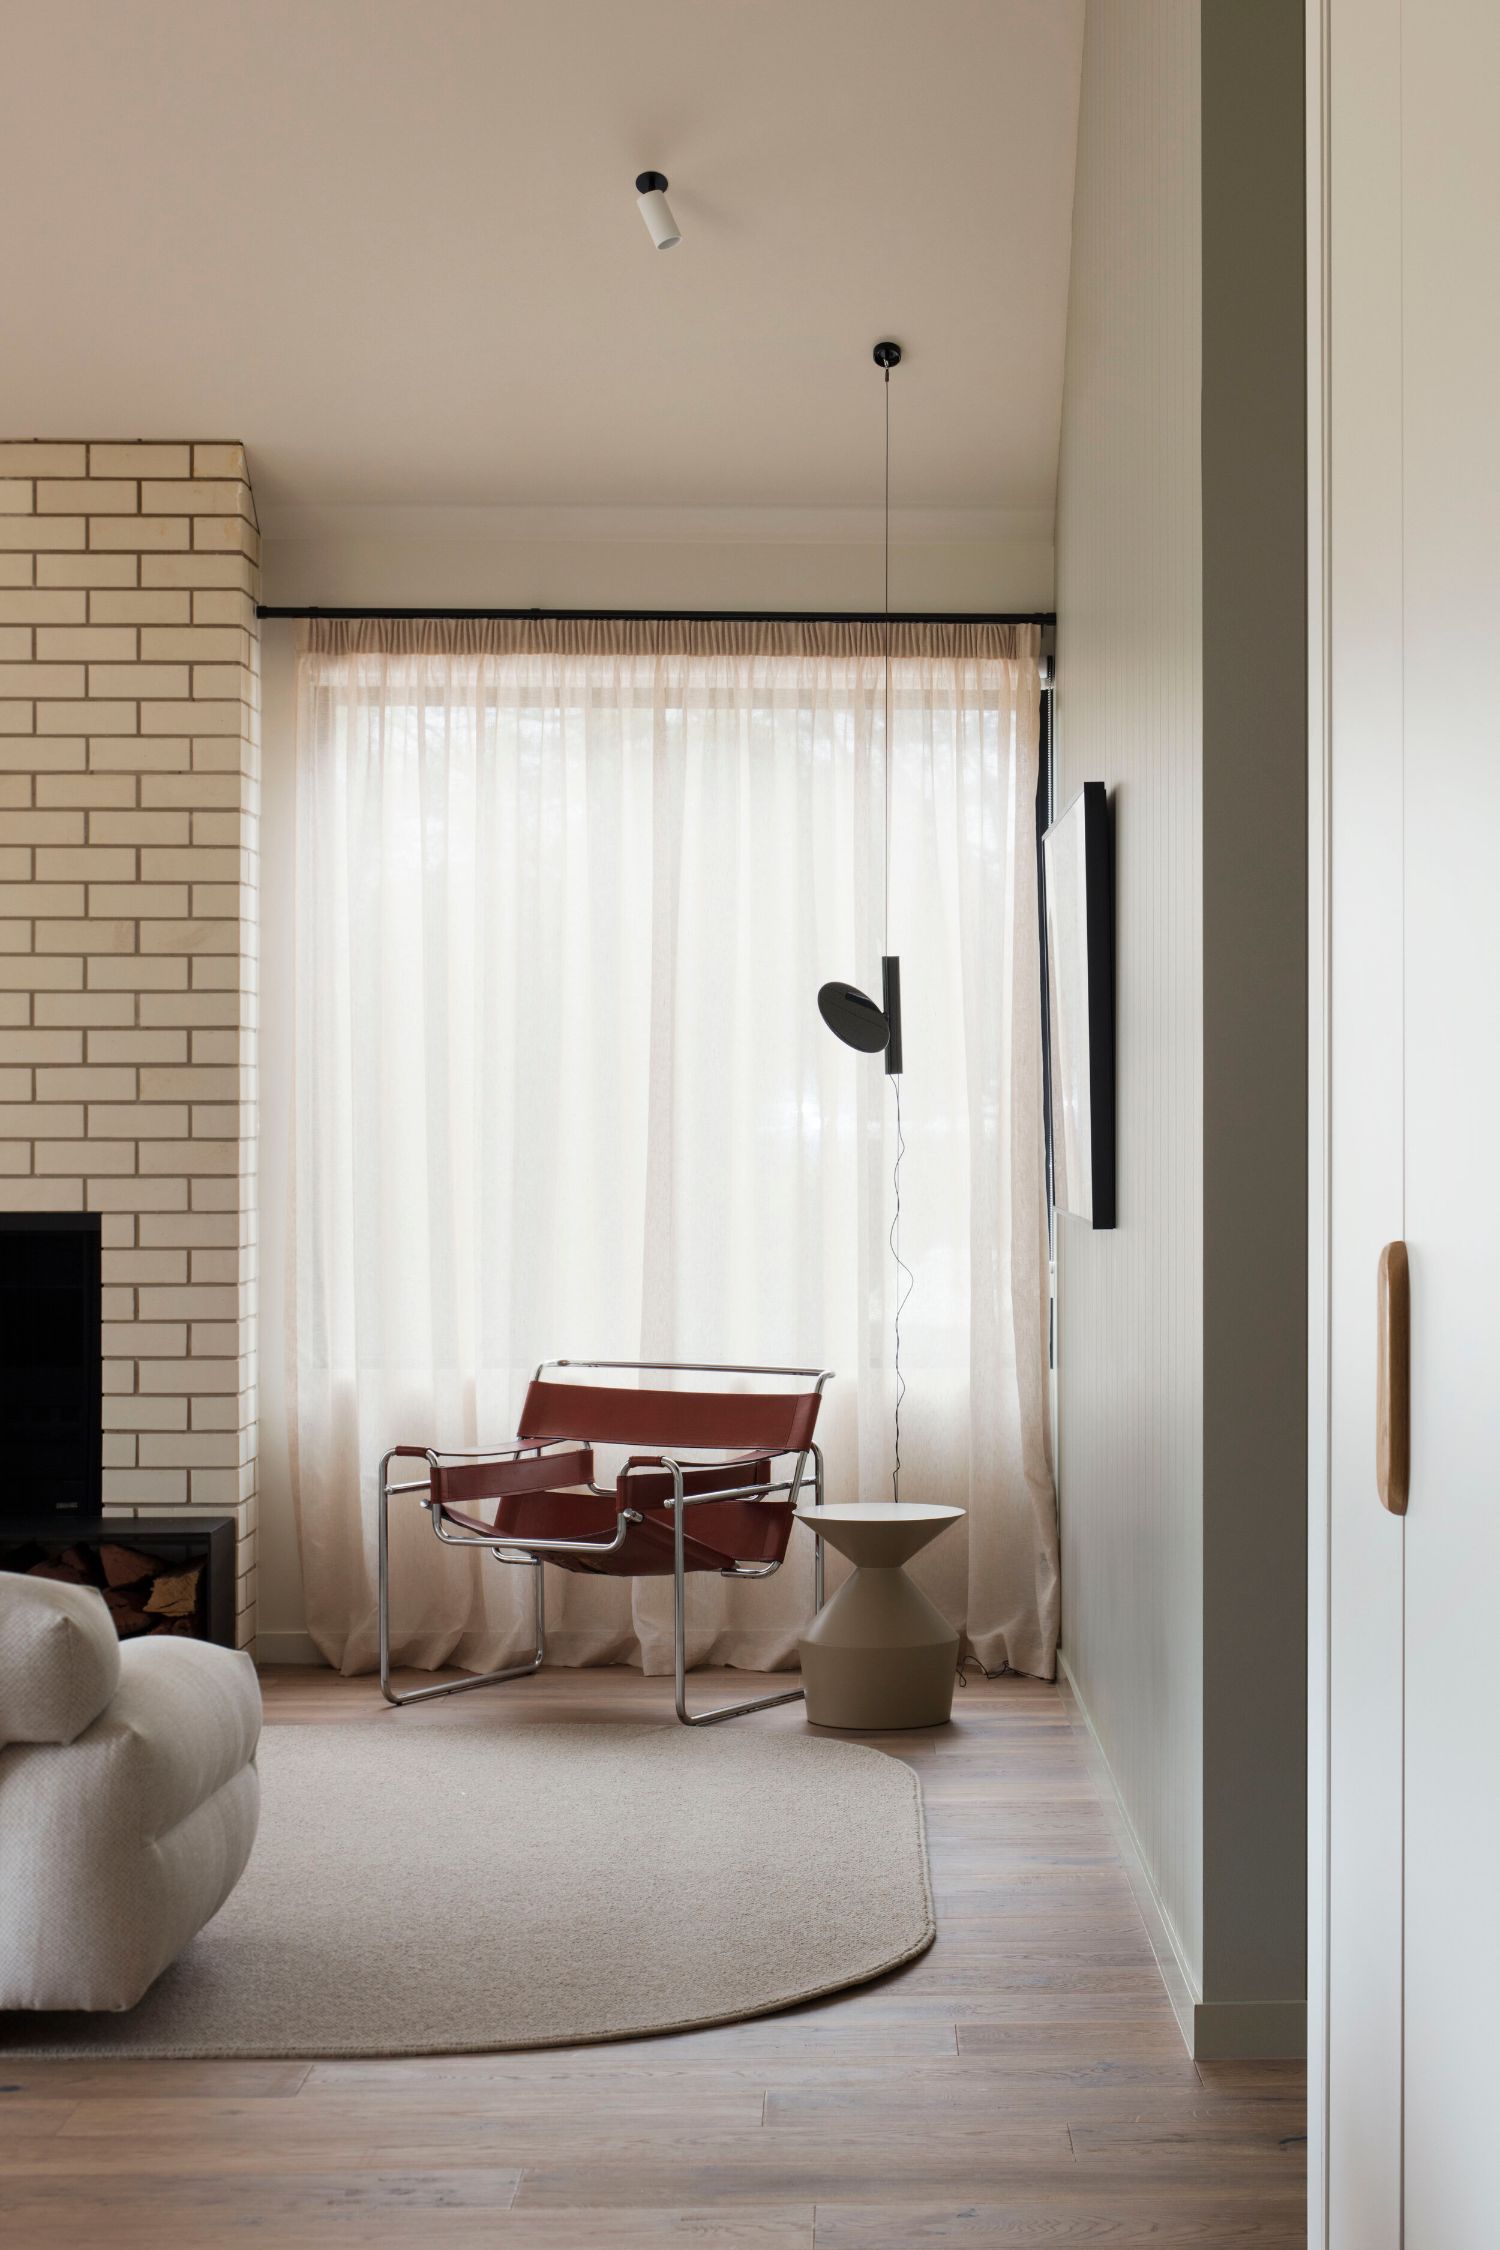 Retreat Residence in Melbourne designed by CJH Studio